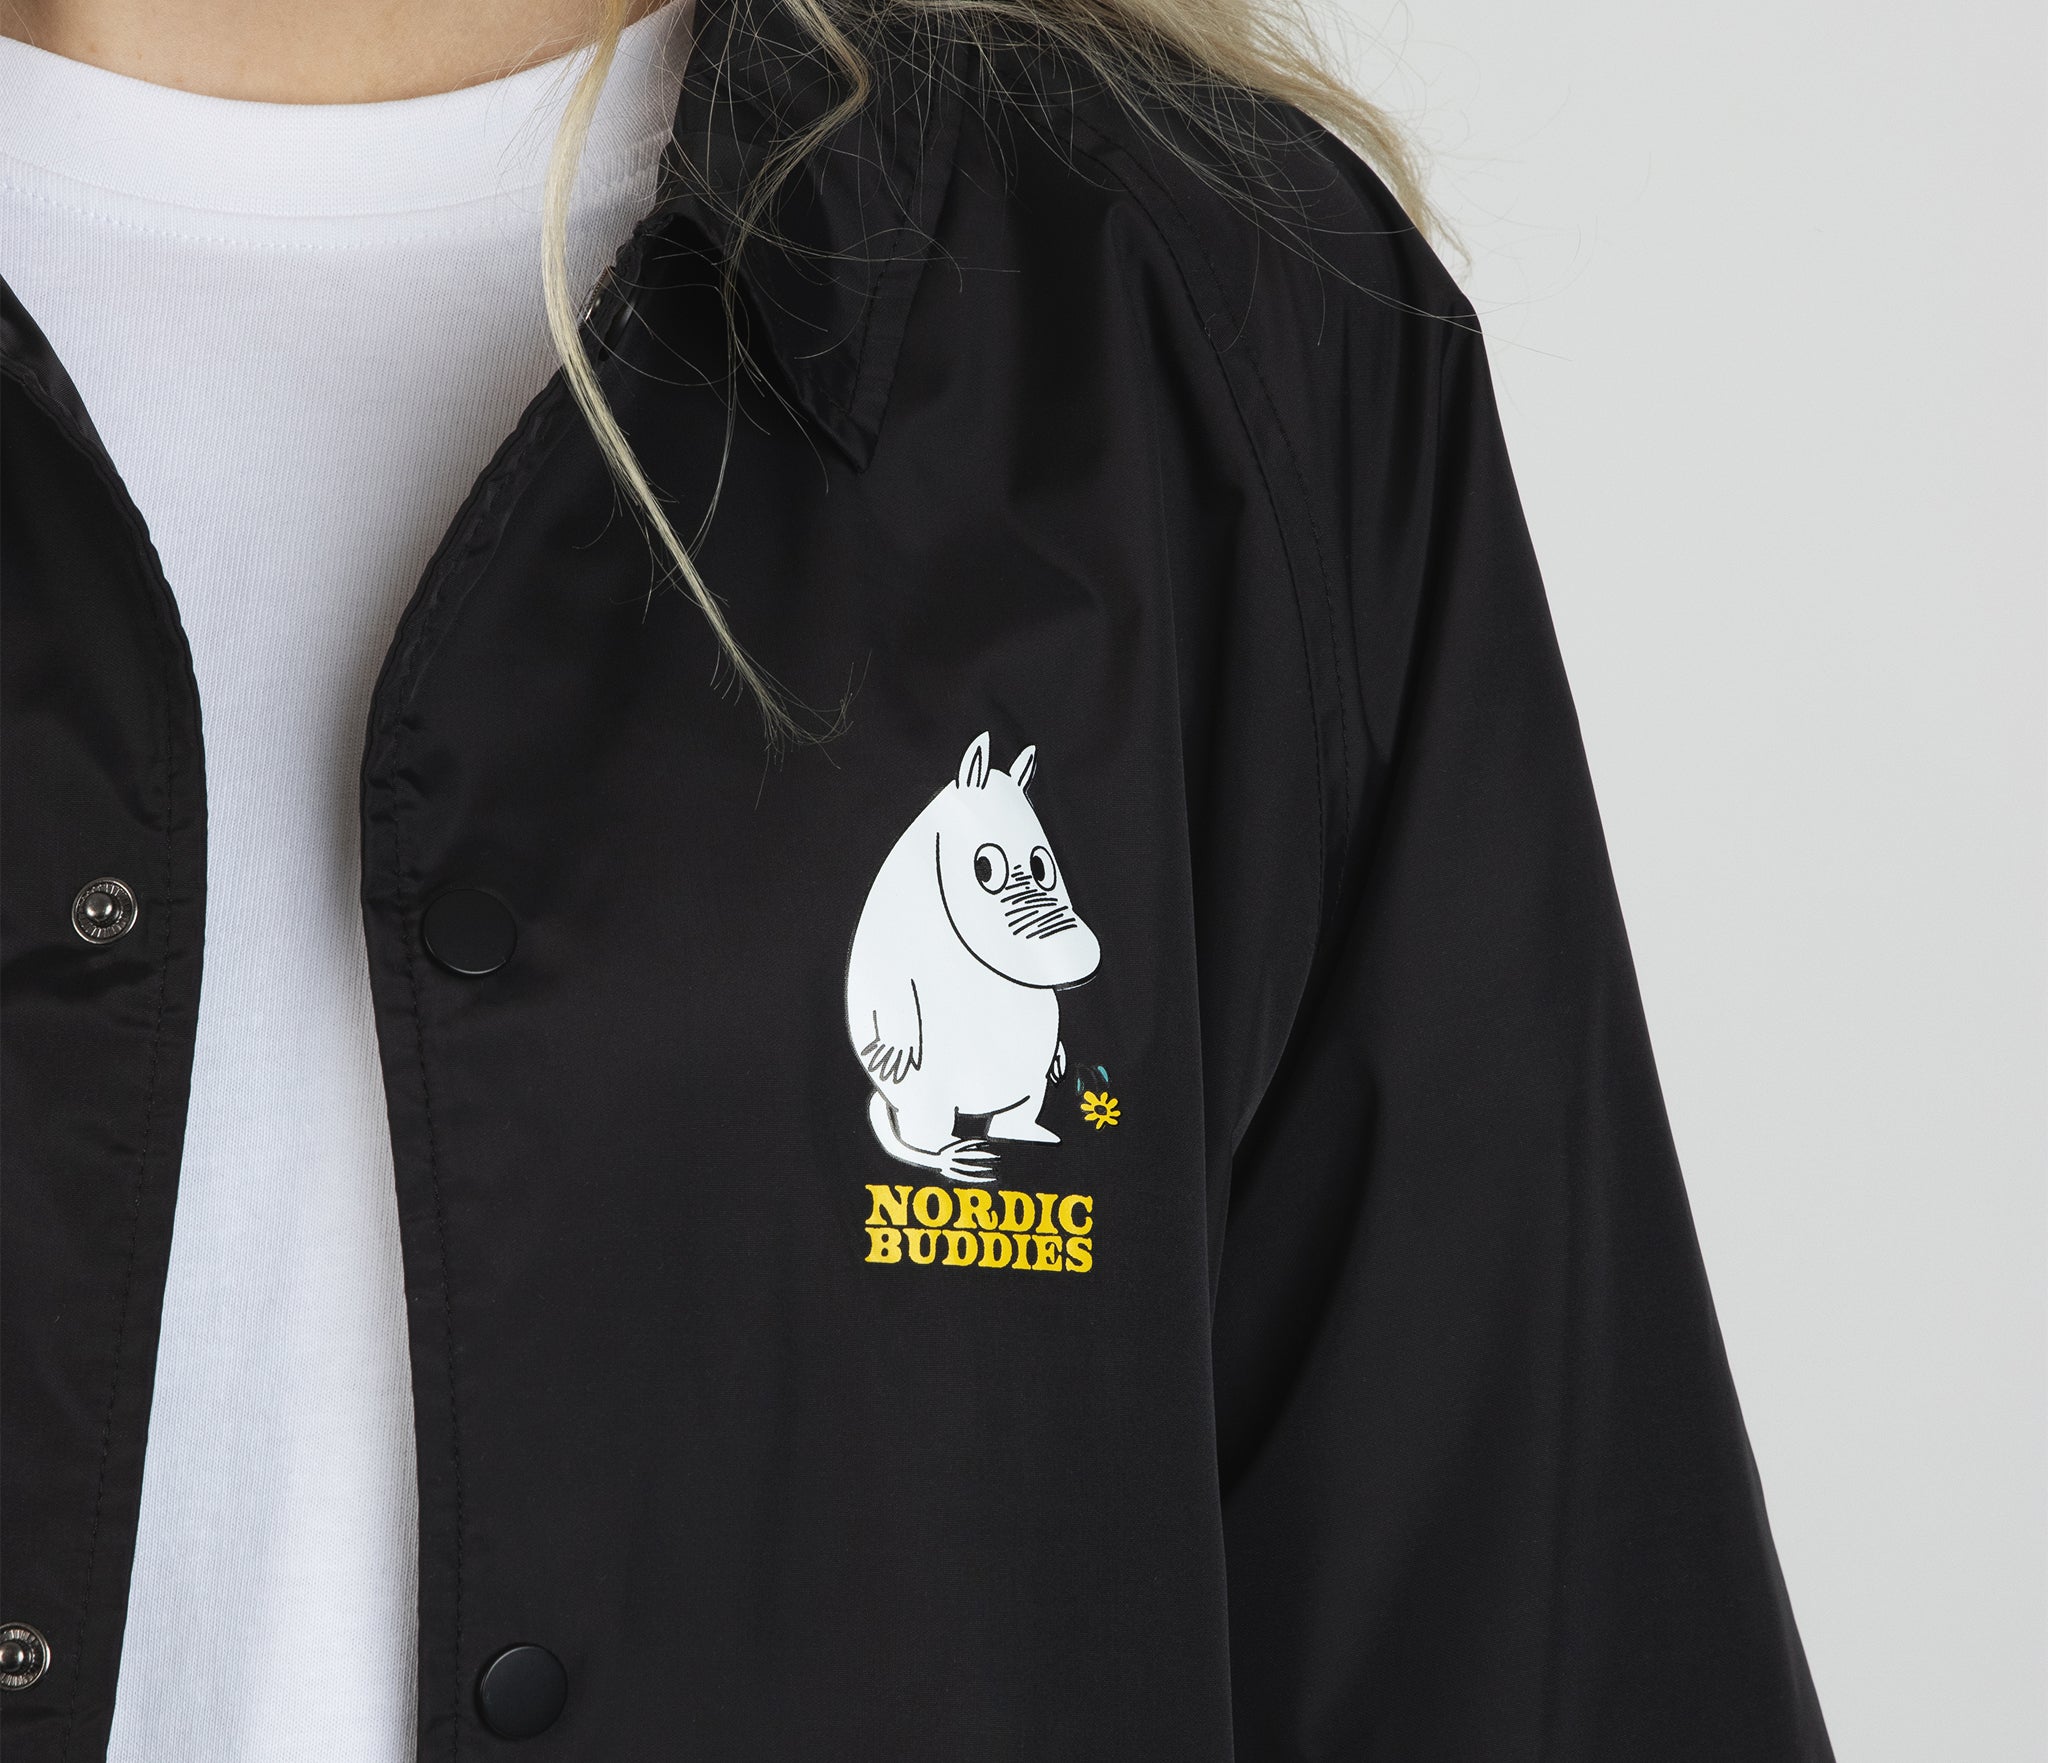 Moomintroll's Flower Coach Jacket - Black